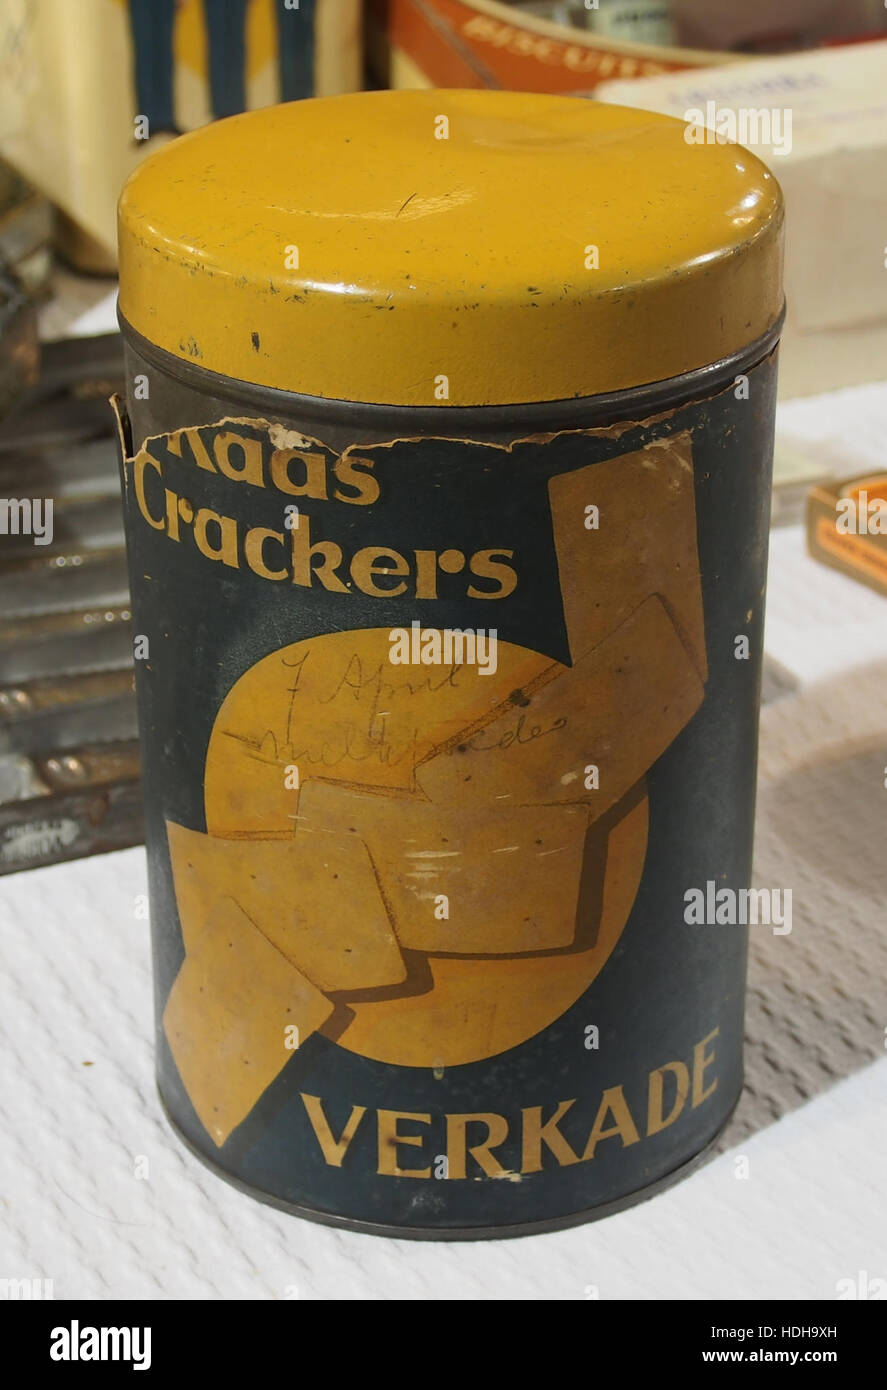 Verkade Kaas Crackers blik pic3 Banque D'Images